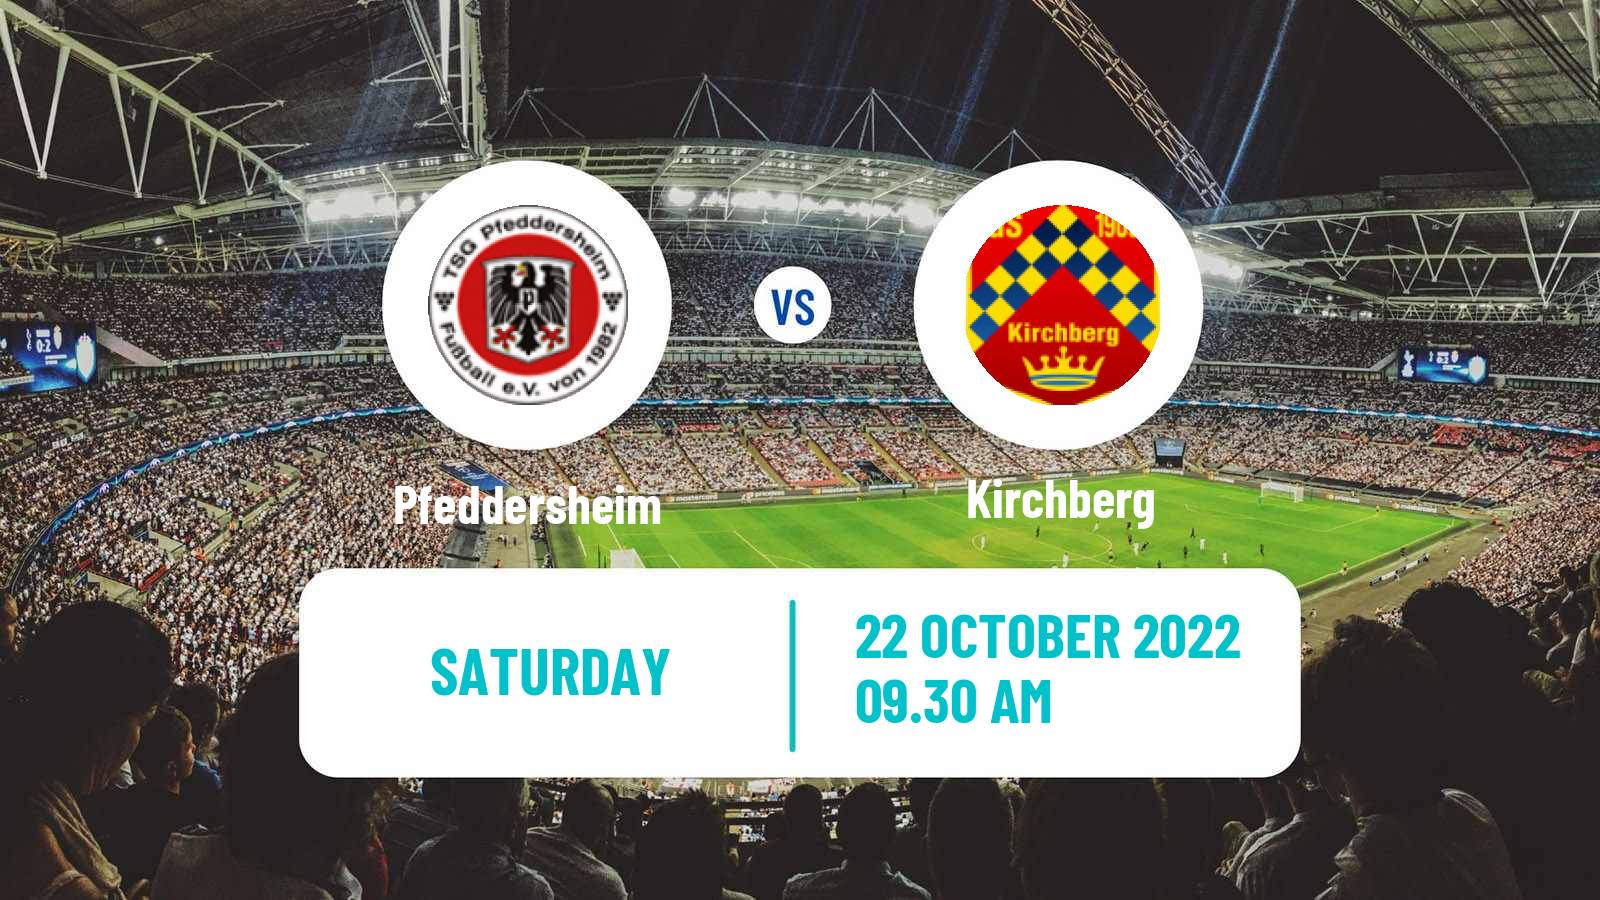 Soccer German Oberliga Rheinland-Pfalz/Saar Pfeddersheim - Kirchberg